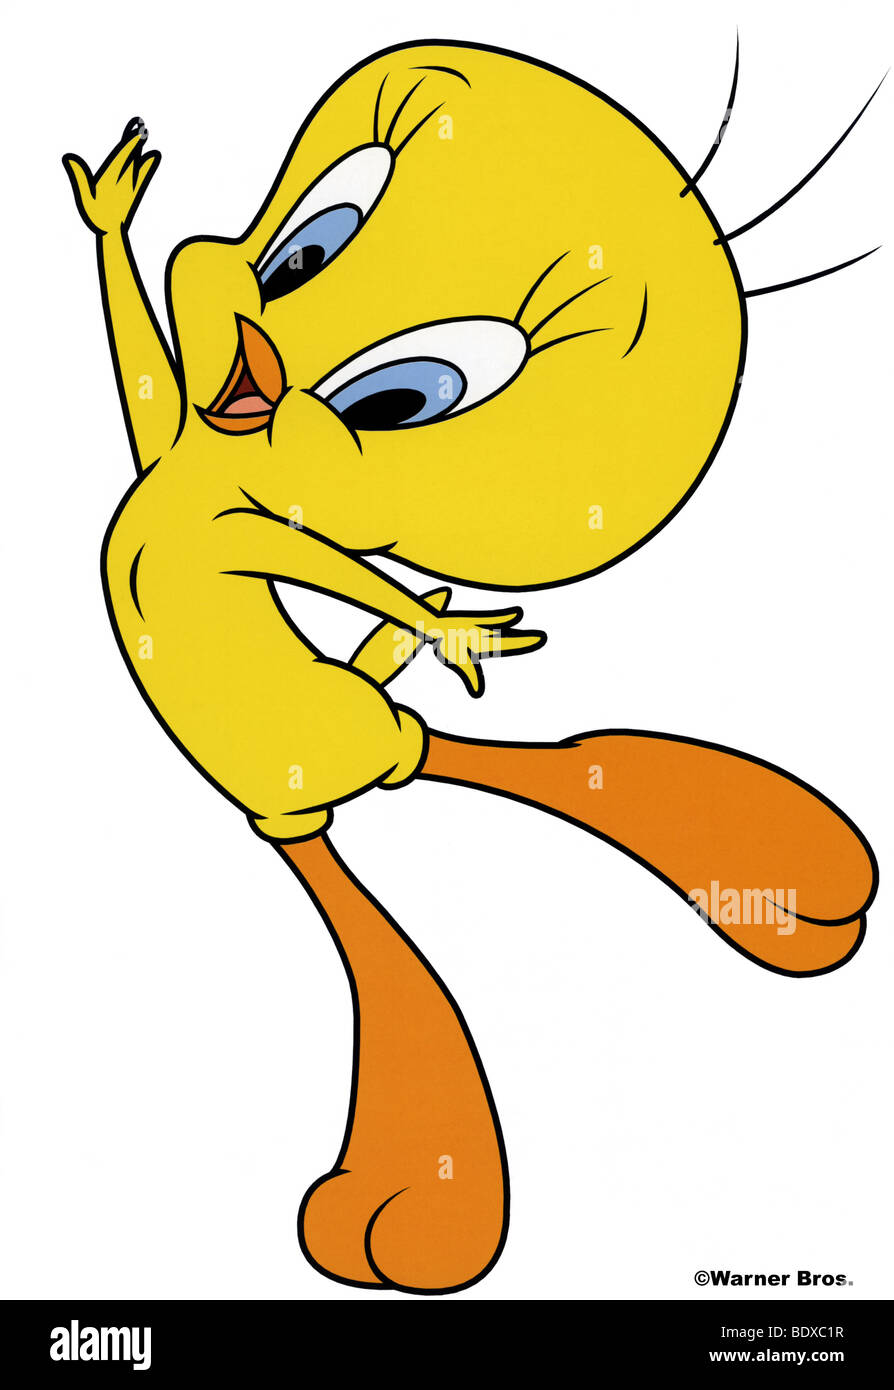 TWEETY PIE - Warner Bros cartoon character Stock Photo - Alamy